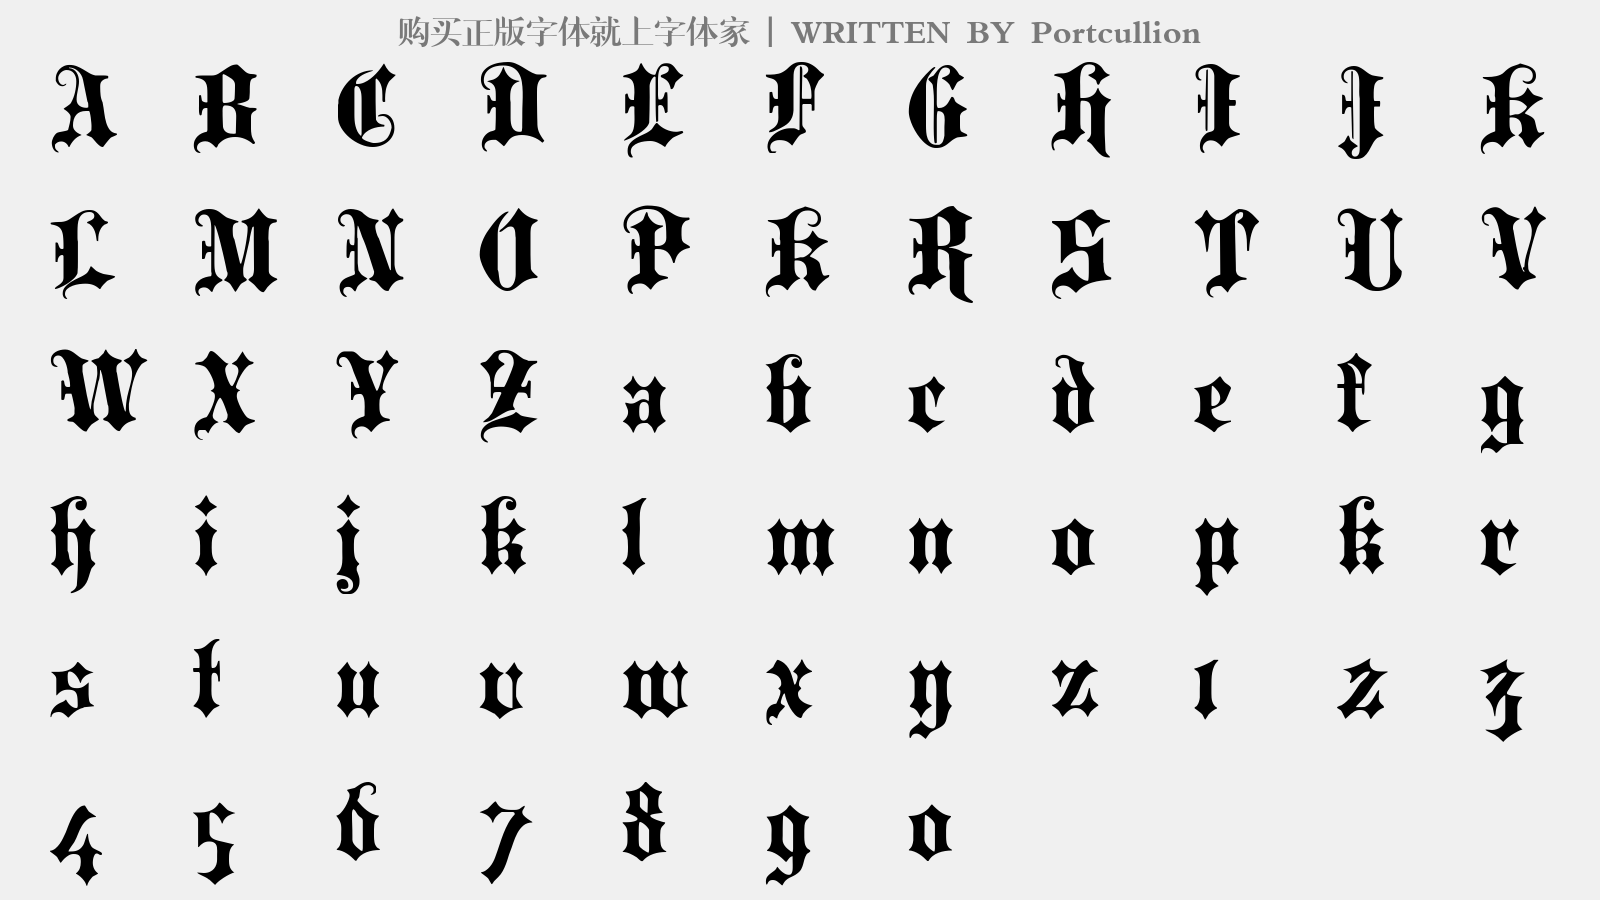 Portcullion - 大写字母/小写字母/数字